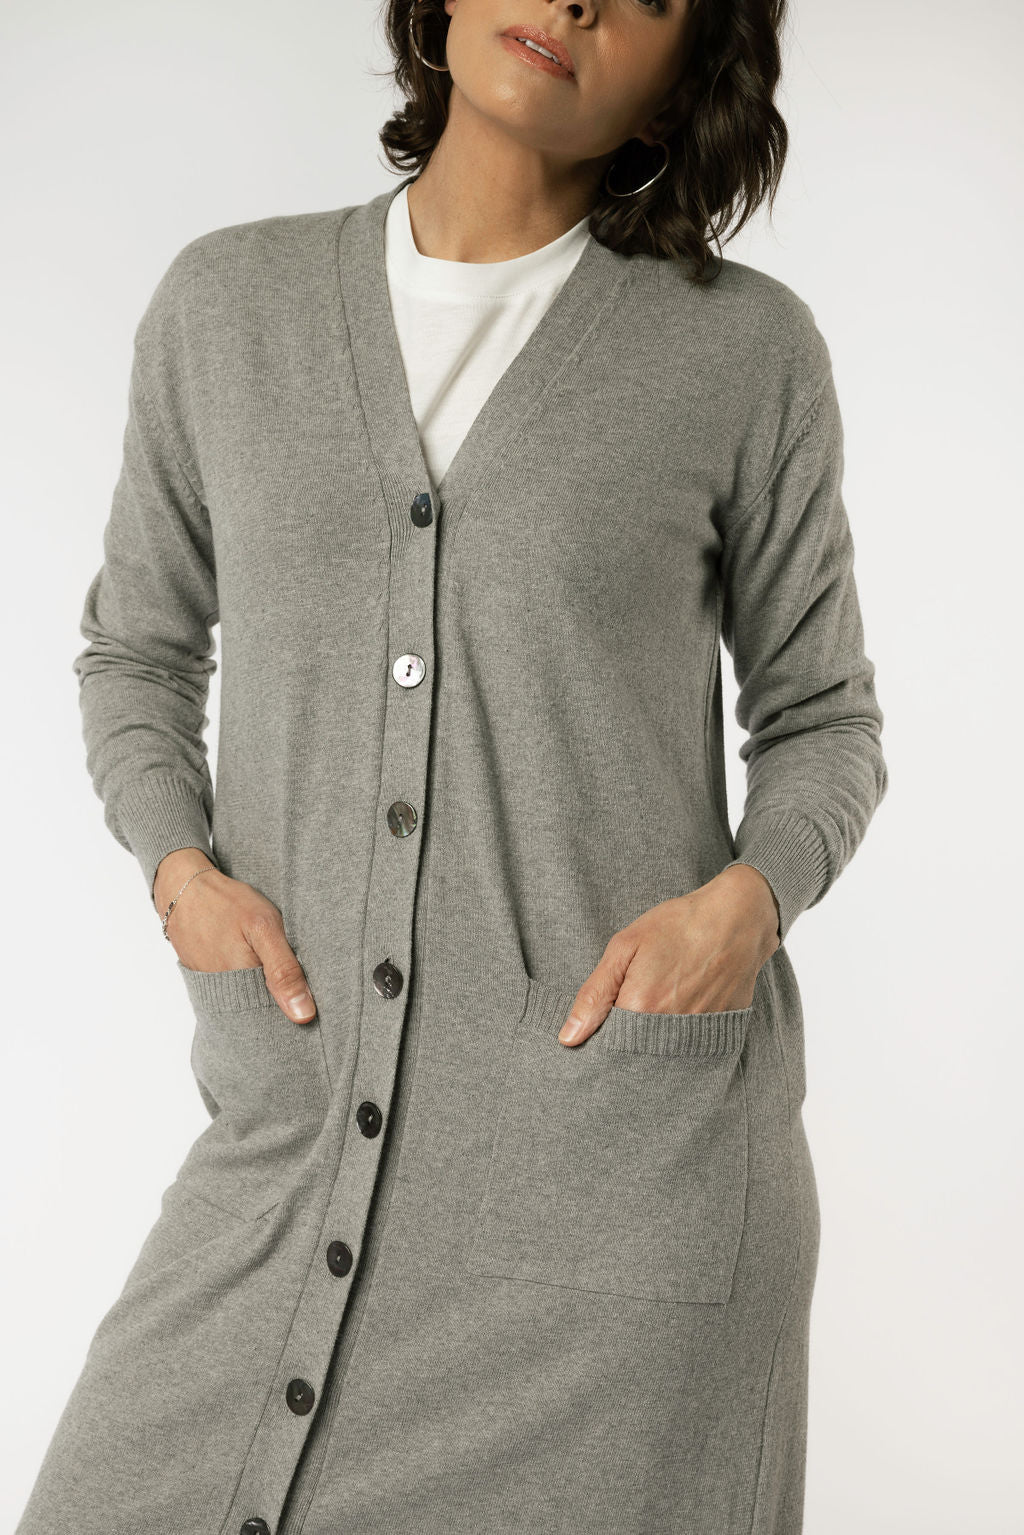 Minimalist Capsule Wardrobe 100% Organic Cotton Gray Cardigan Sweater Dress with Pockets